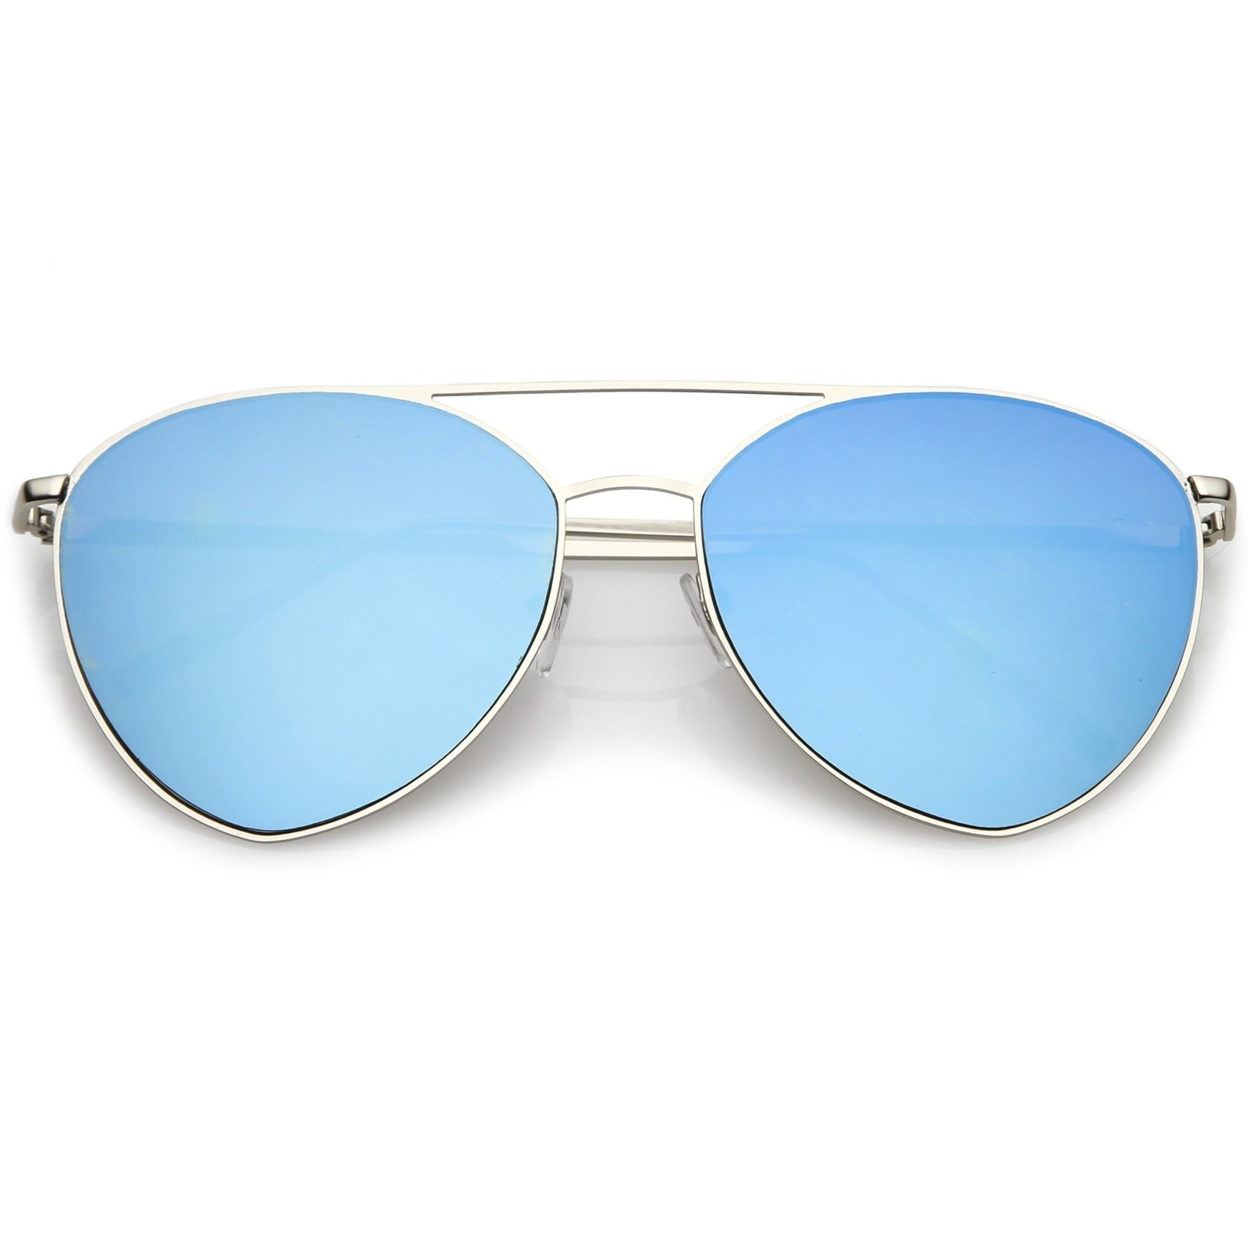 Oversize Thin Metal Aviator Sunglasses Double Crossbar Mirrored Flat Lens 62mm - Silver / Silver Mirror